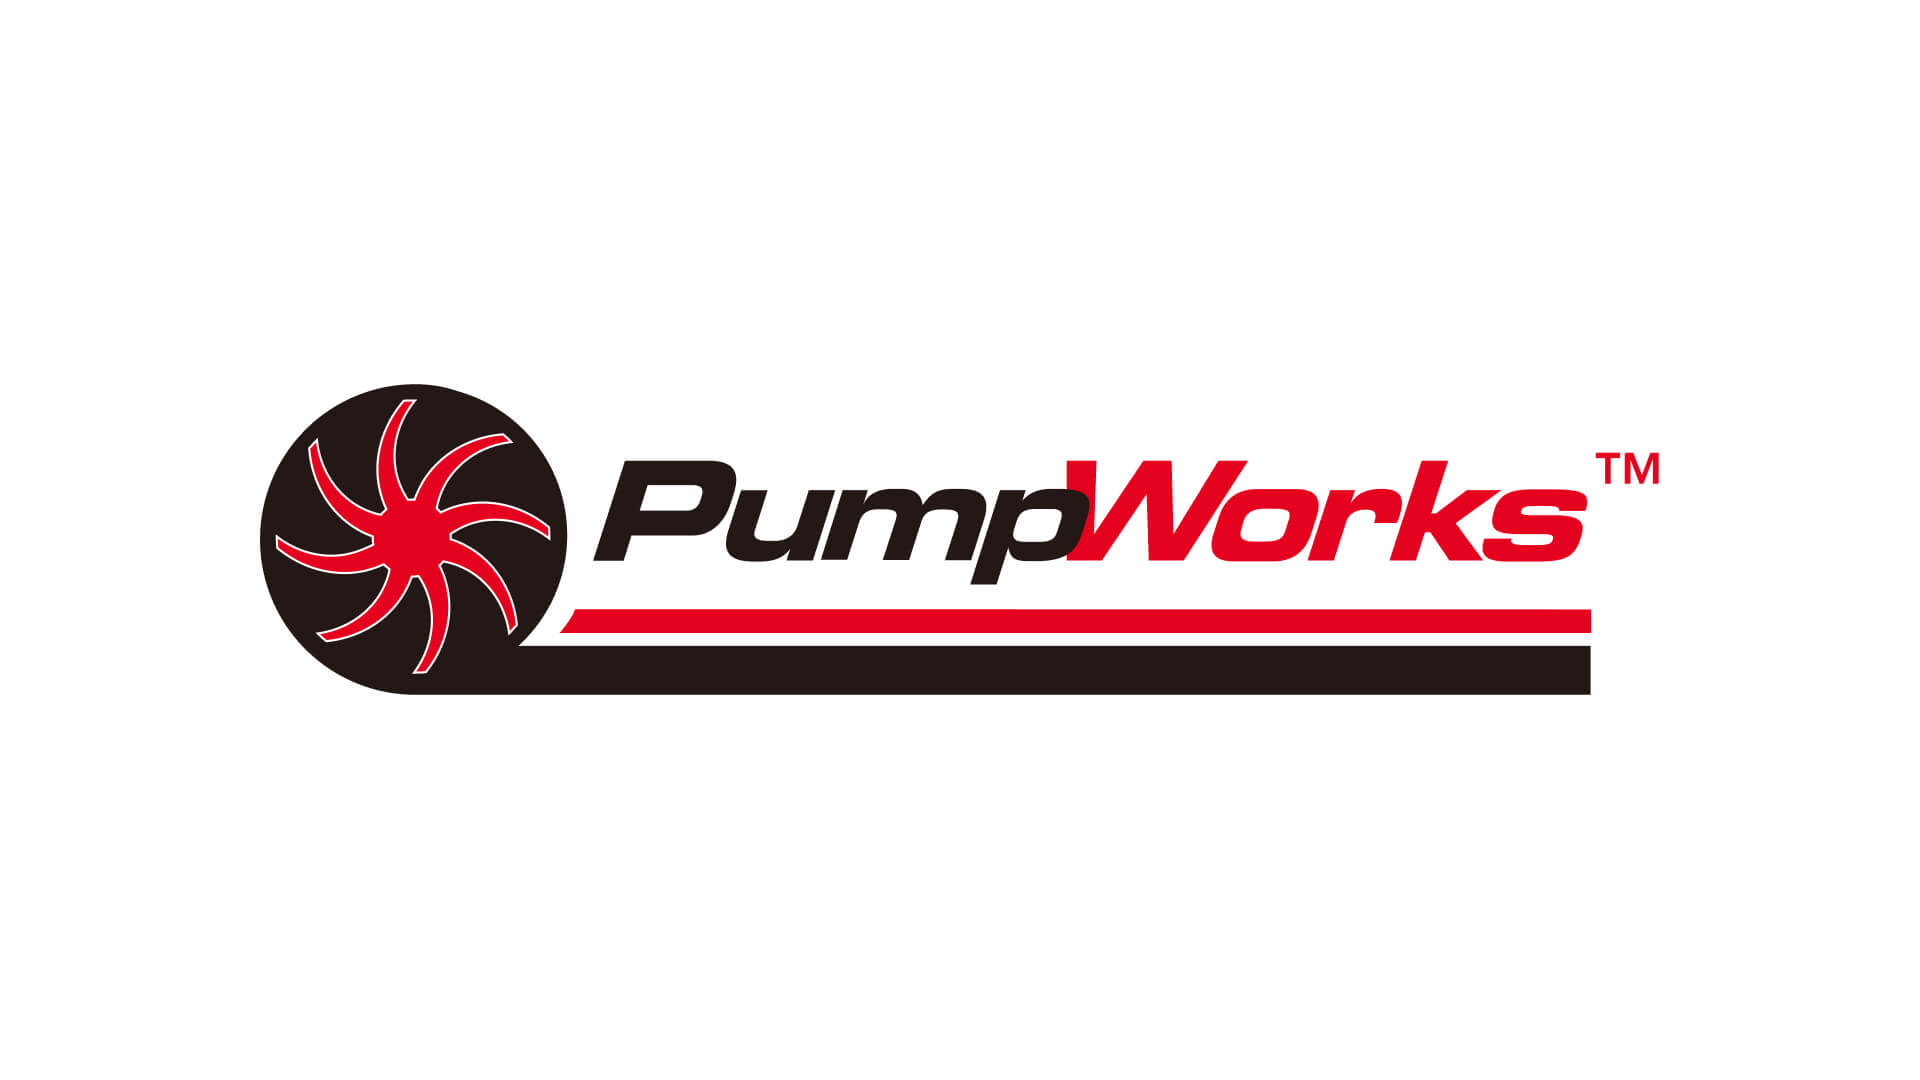 PumpWorks logo on white background